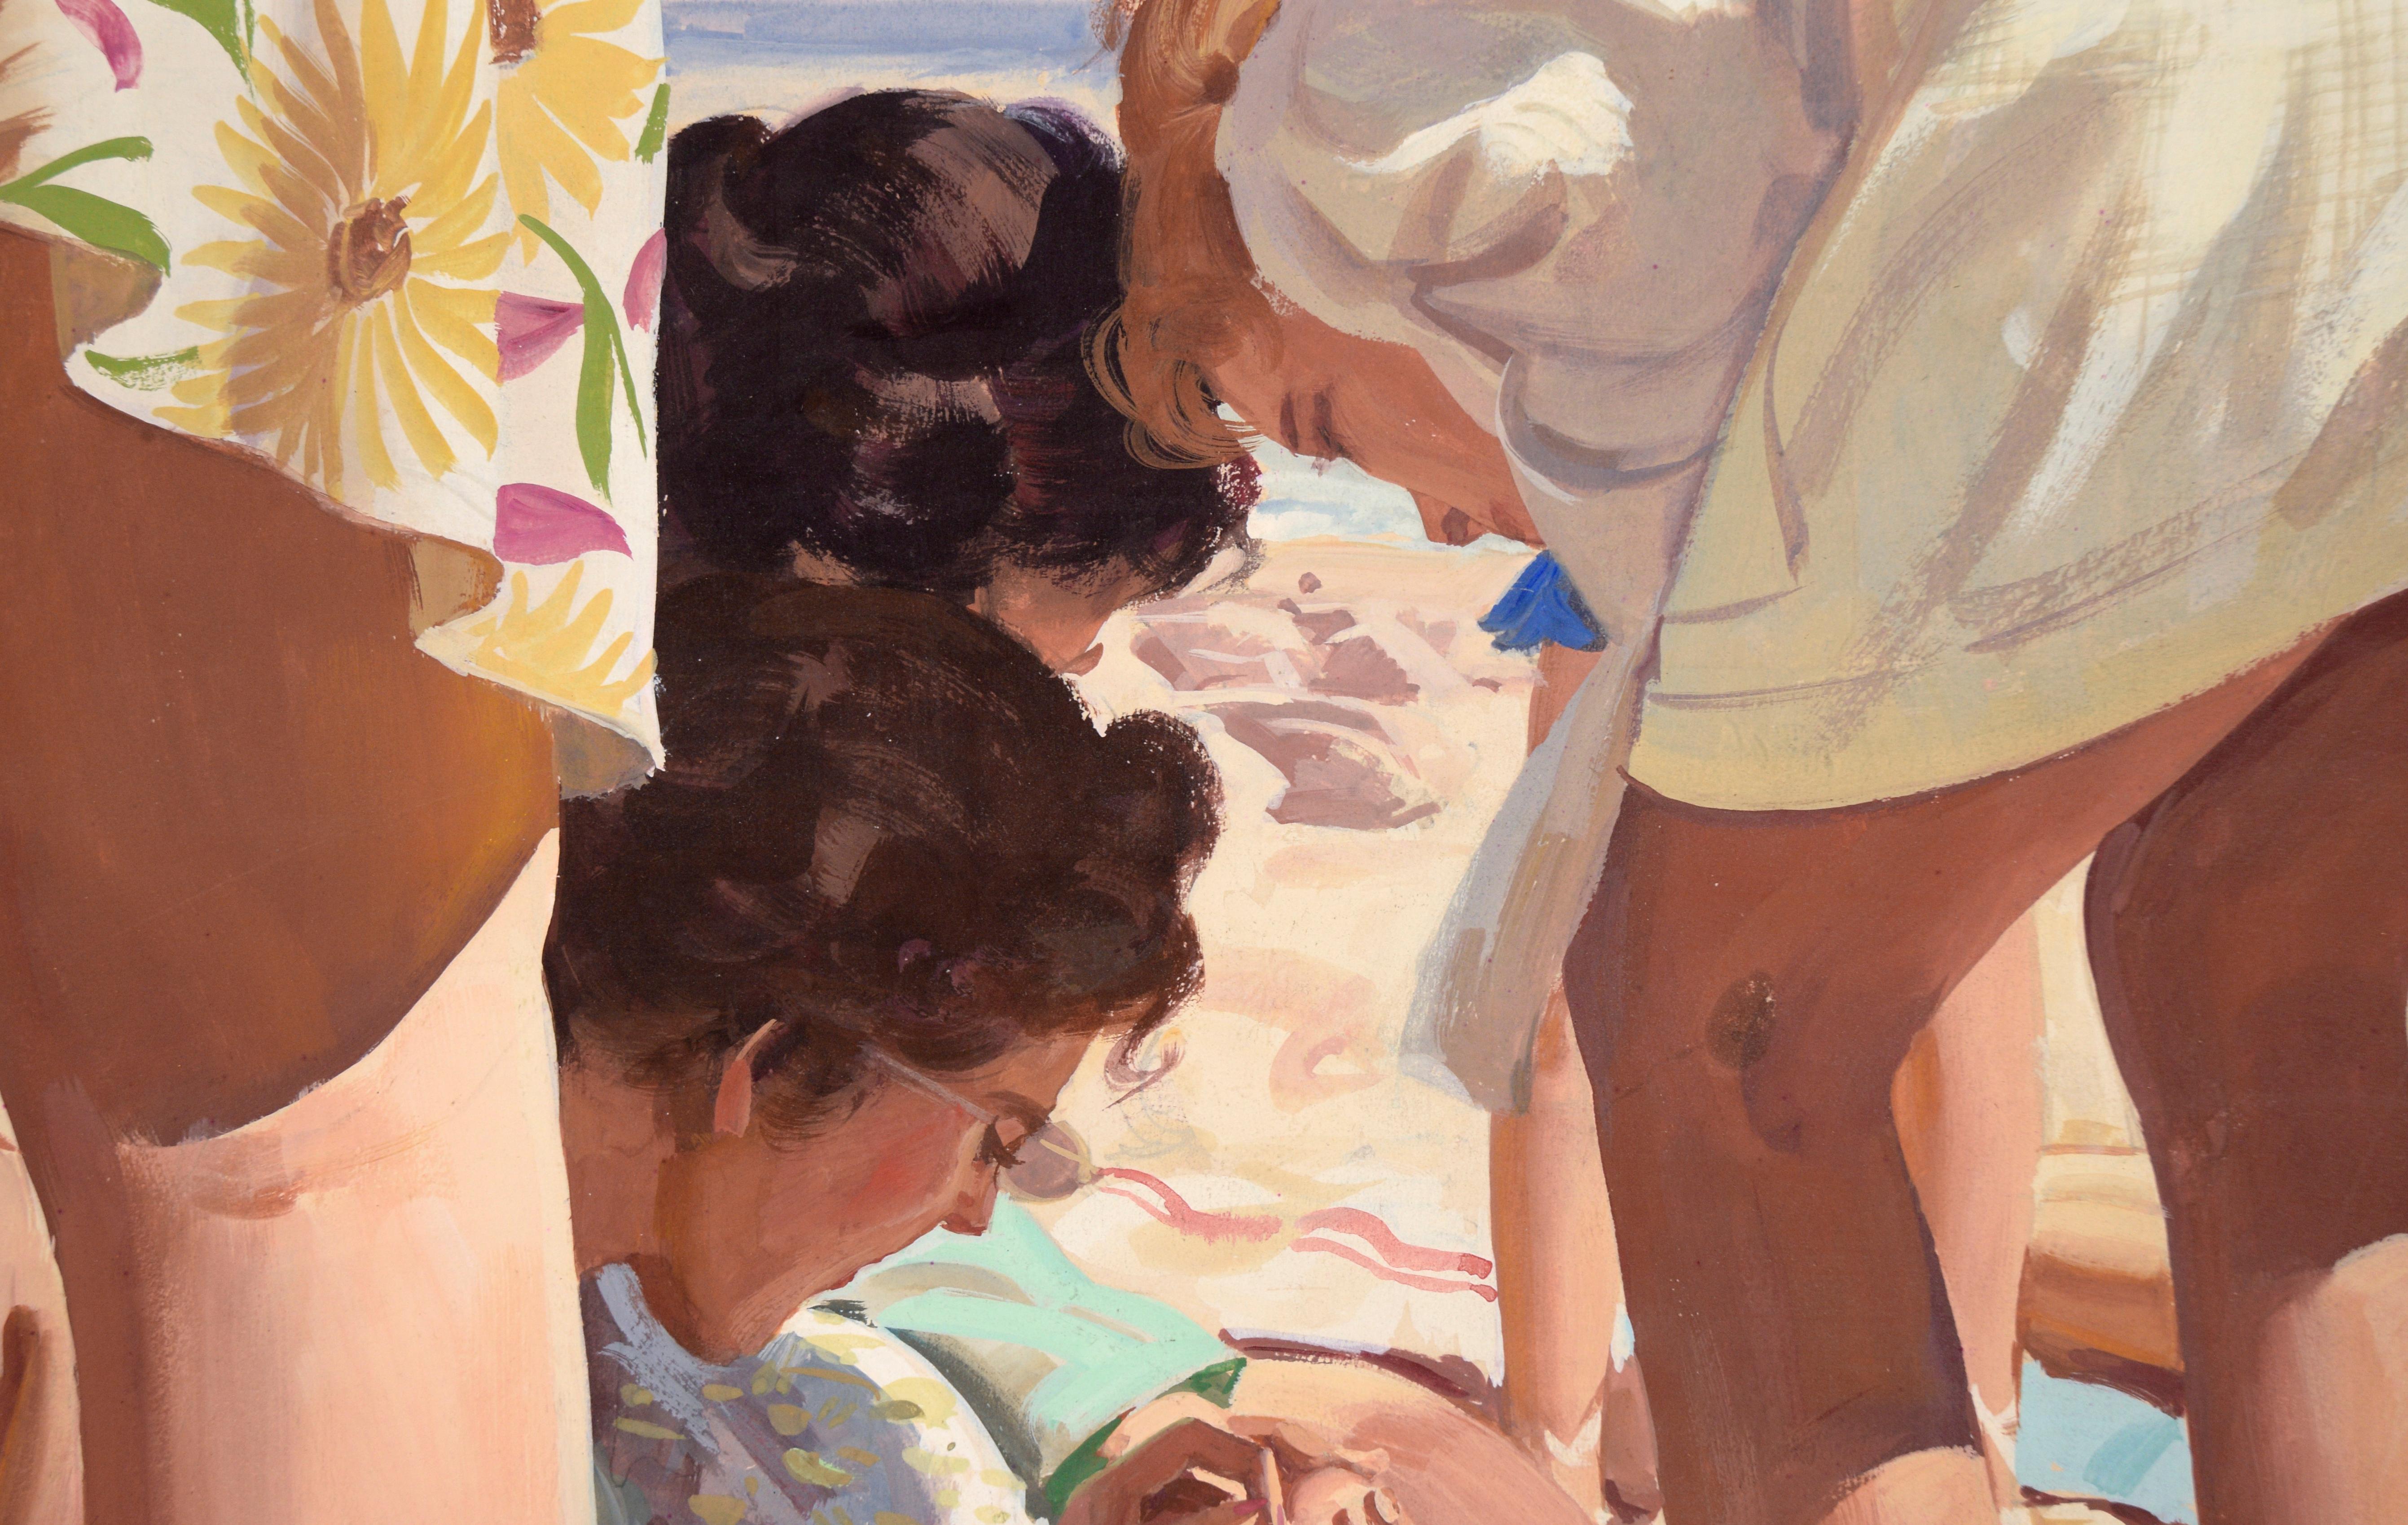 Day at the Beach - Realistische figurative Illustration in Gouache (Amerikanischer Impressionismus), Painting, von Charles Kinghan